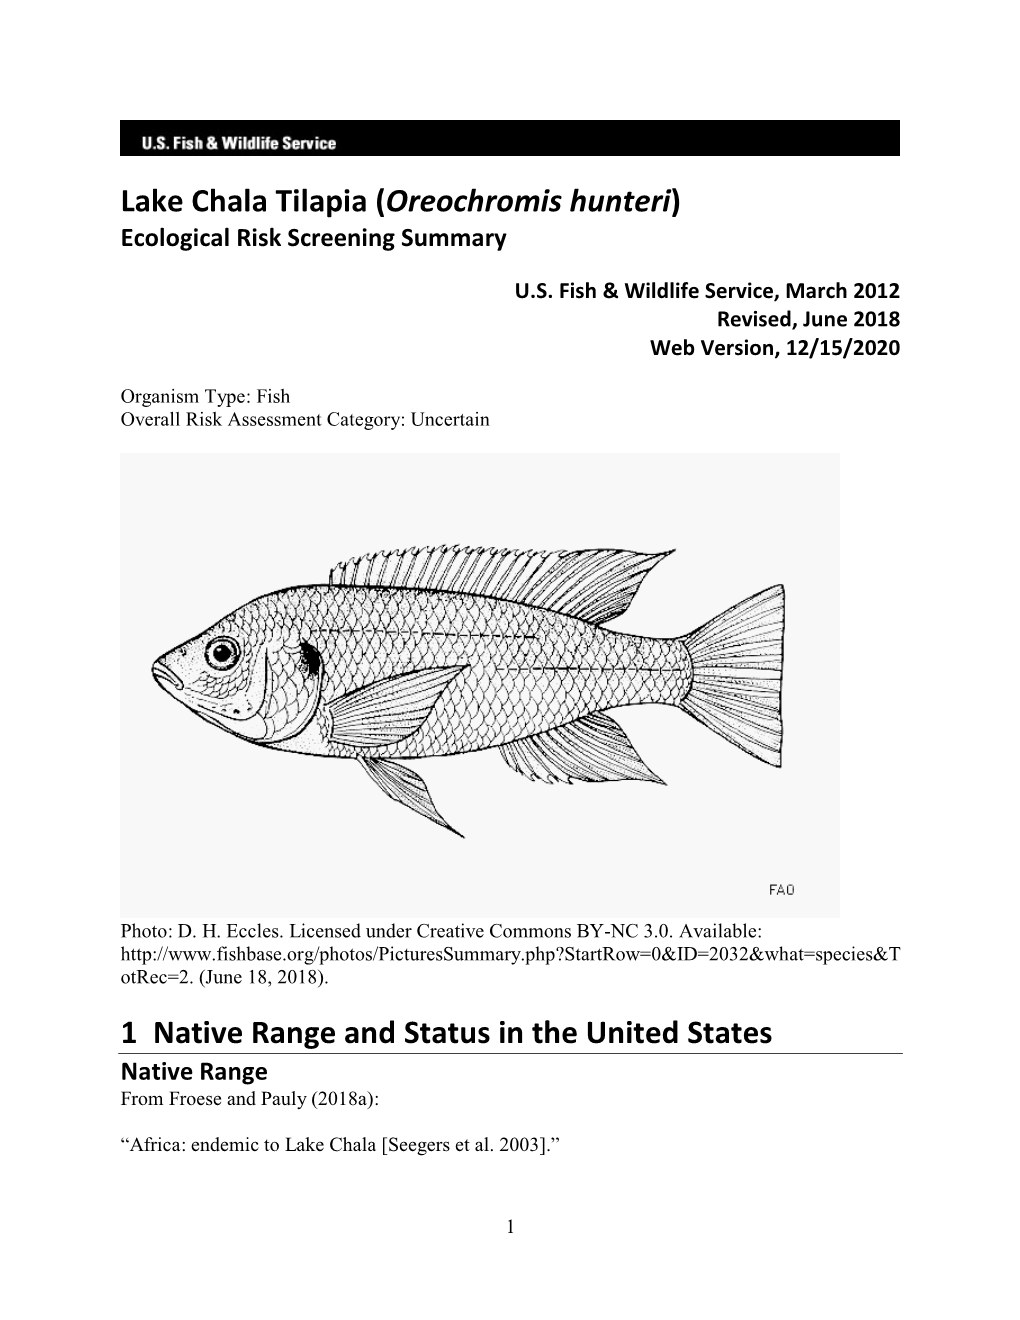 Lake Chala Tilapia (Oreochromis Hunteri) Ecological Risk Screening Summary